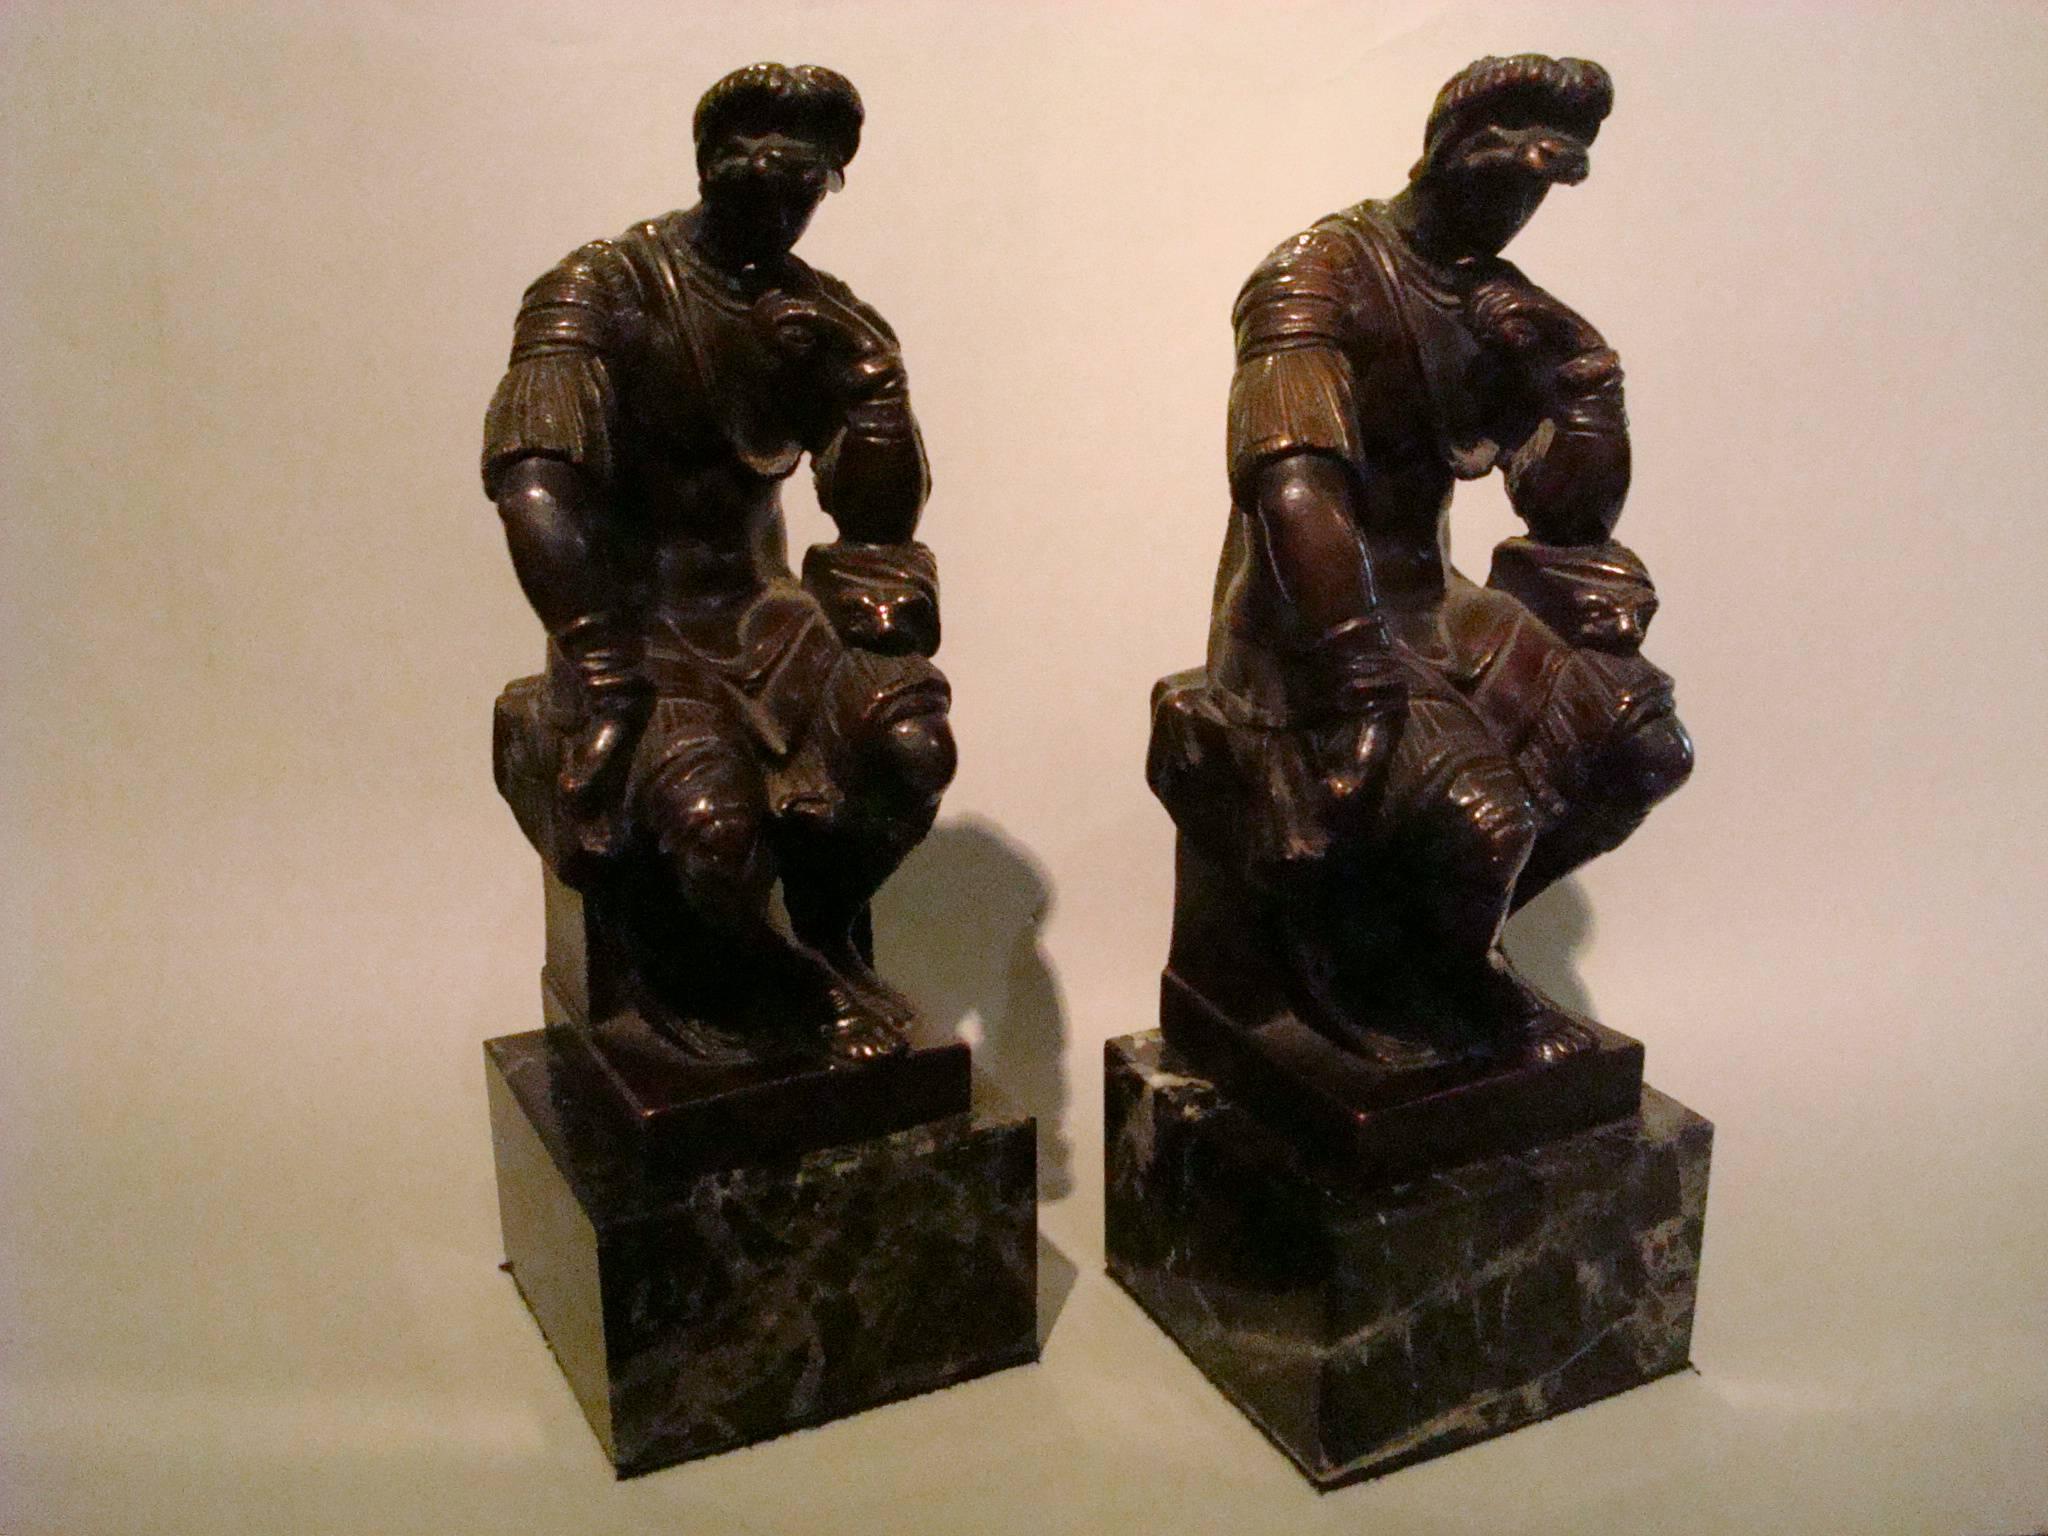 20th Century Thinking Roman Bronze Sculpture Bookends after Michelangelo 